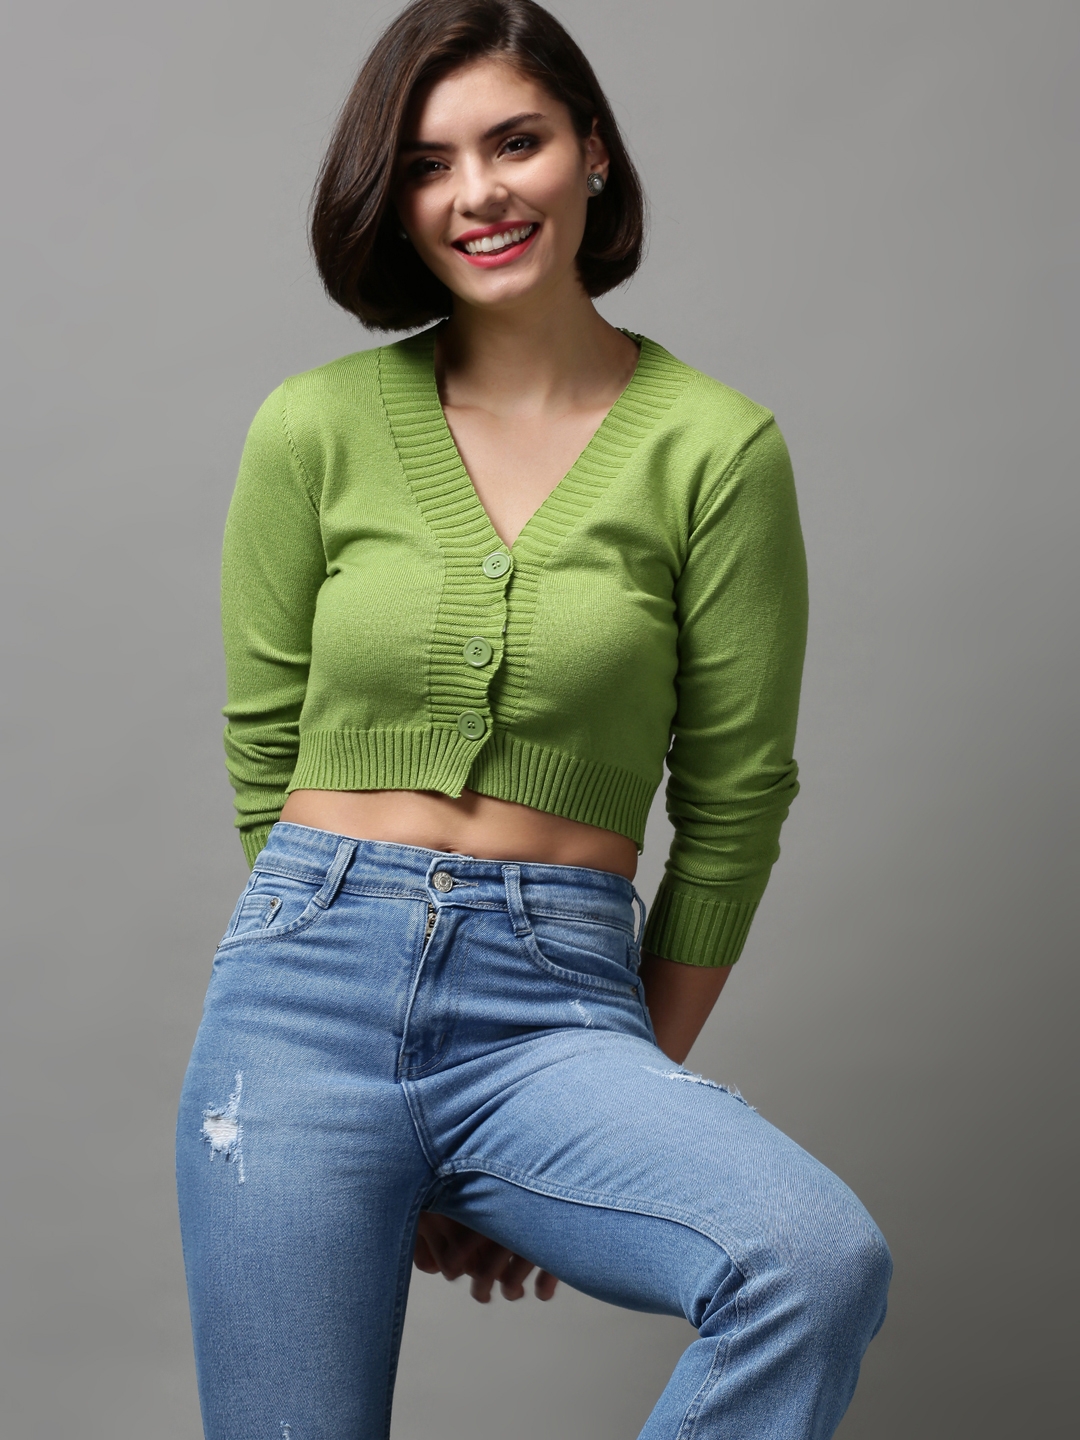 SHOWOFF Women's Long Sleeves V-Neck Green Solid Sweater Vest